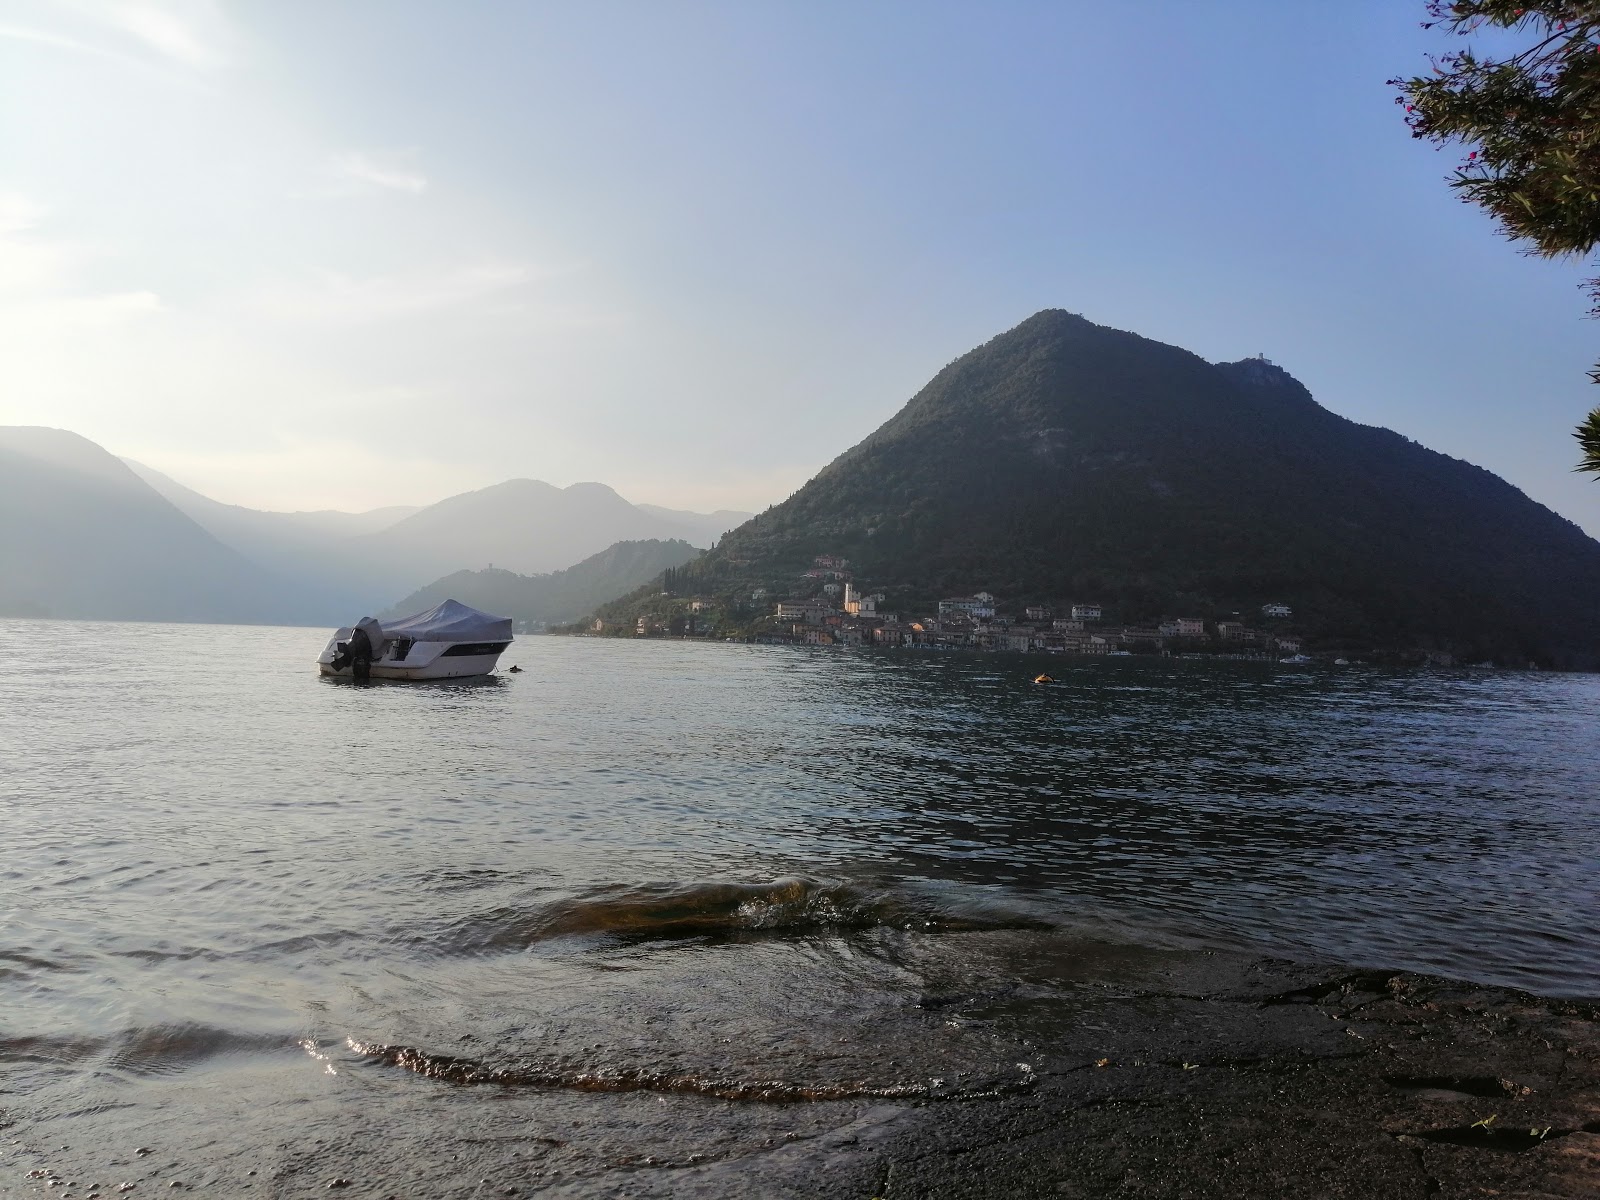 Fotografija Spiaggia Libera Carini z turkizna voda površino